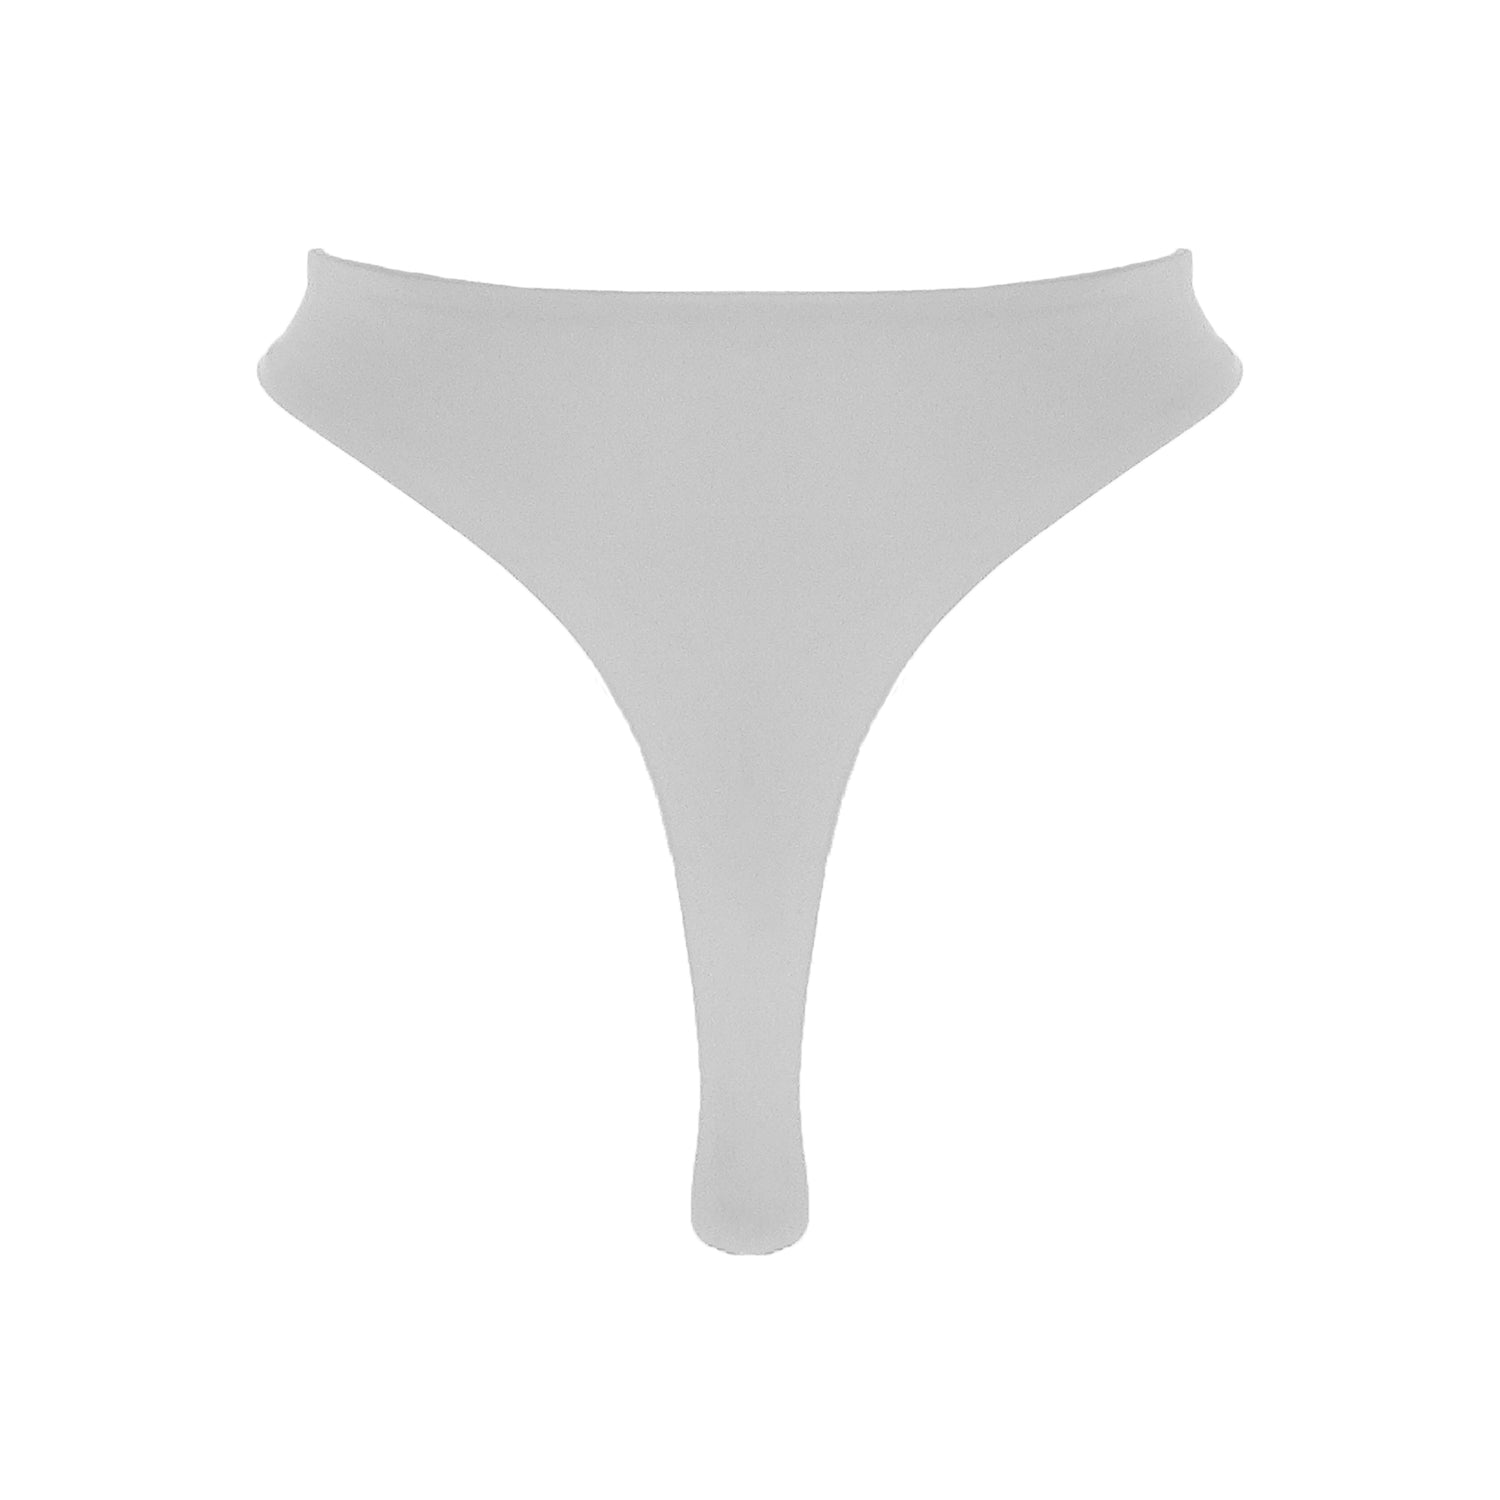 Back view of light grey High waist thong bikini bottom with high cut legs and thong bum coverage.